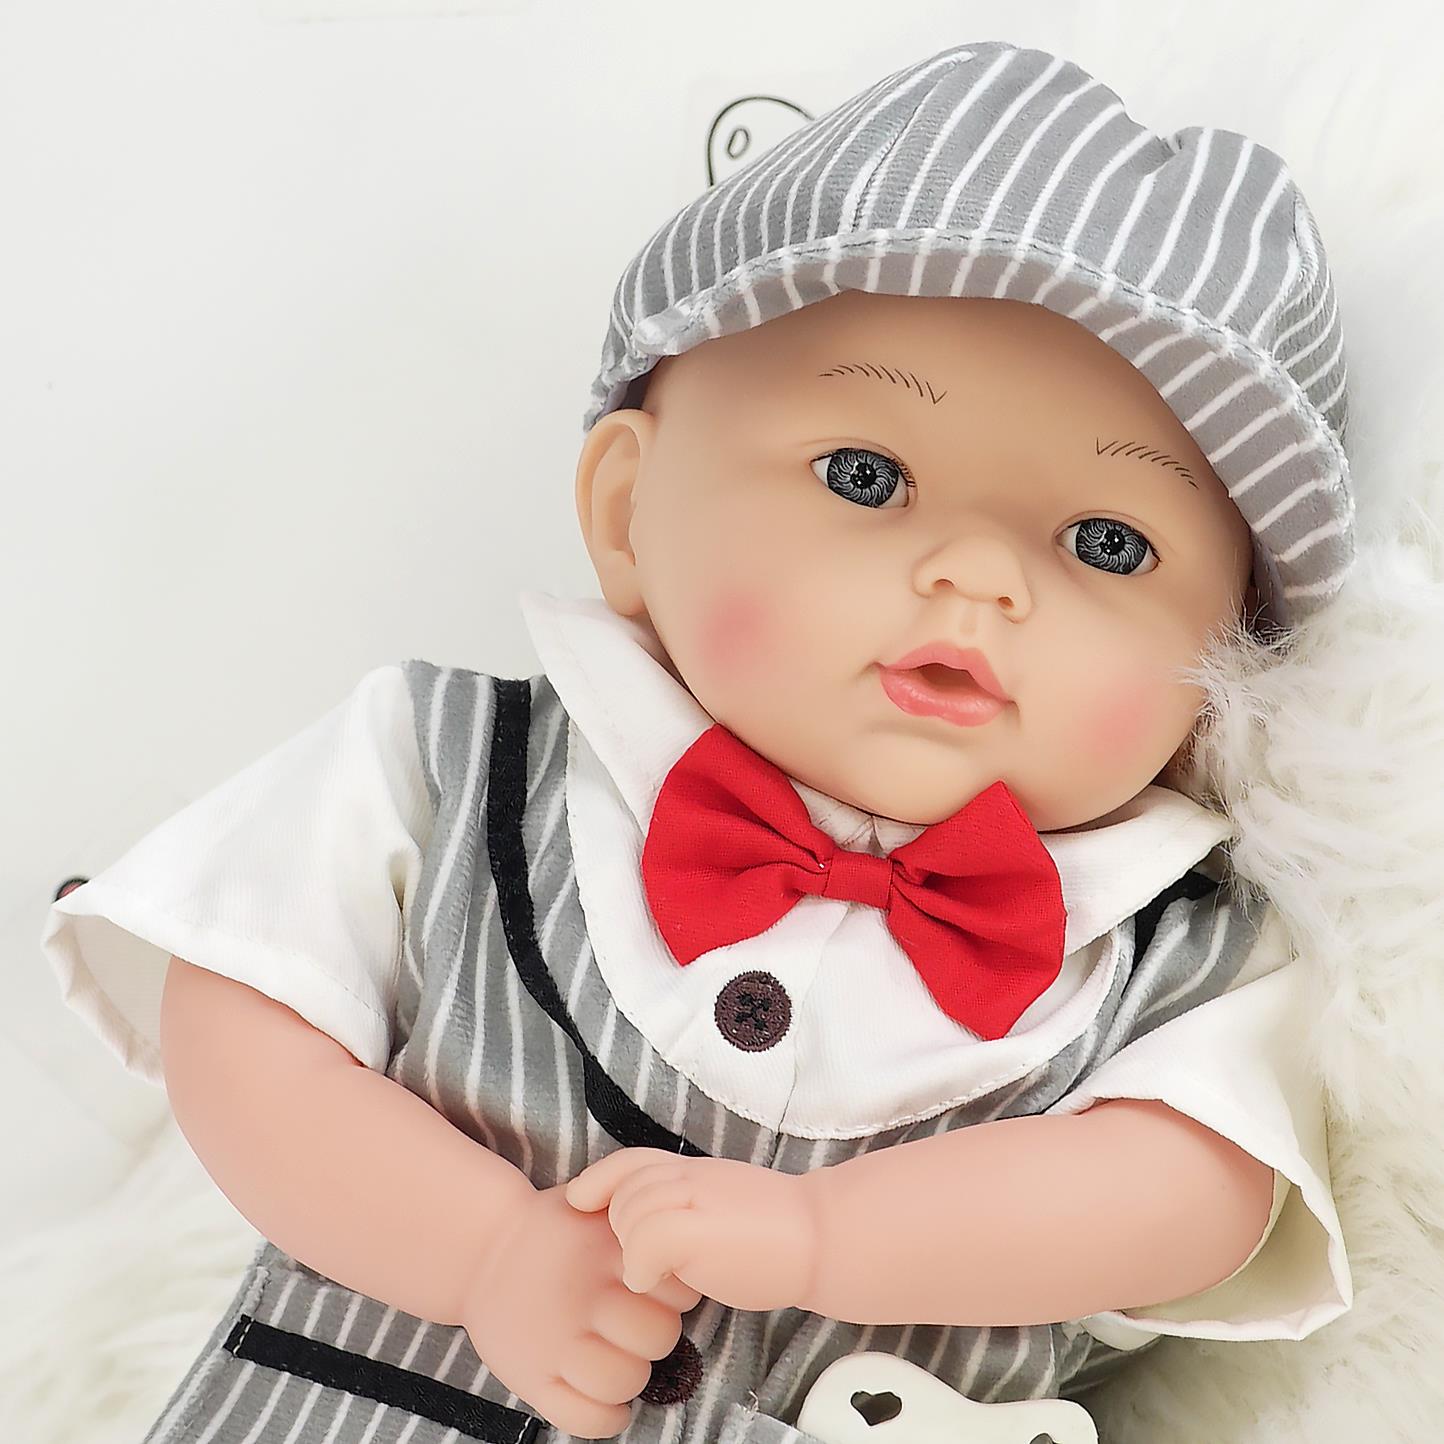 BiBi Baby Doll - Charlie (45 cm / 18") by BiBi Doll - The Magic Toy Shop